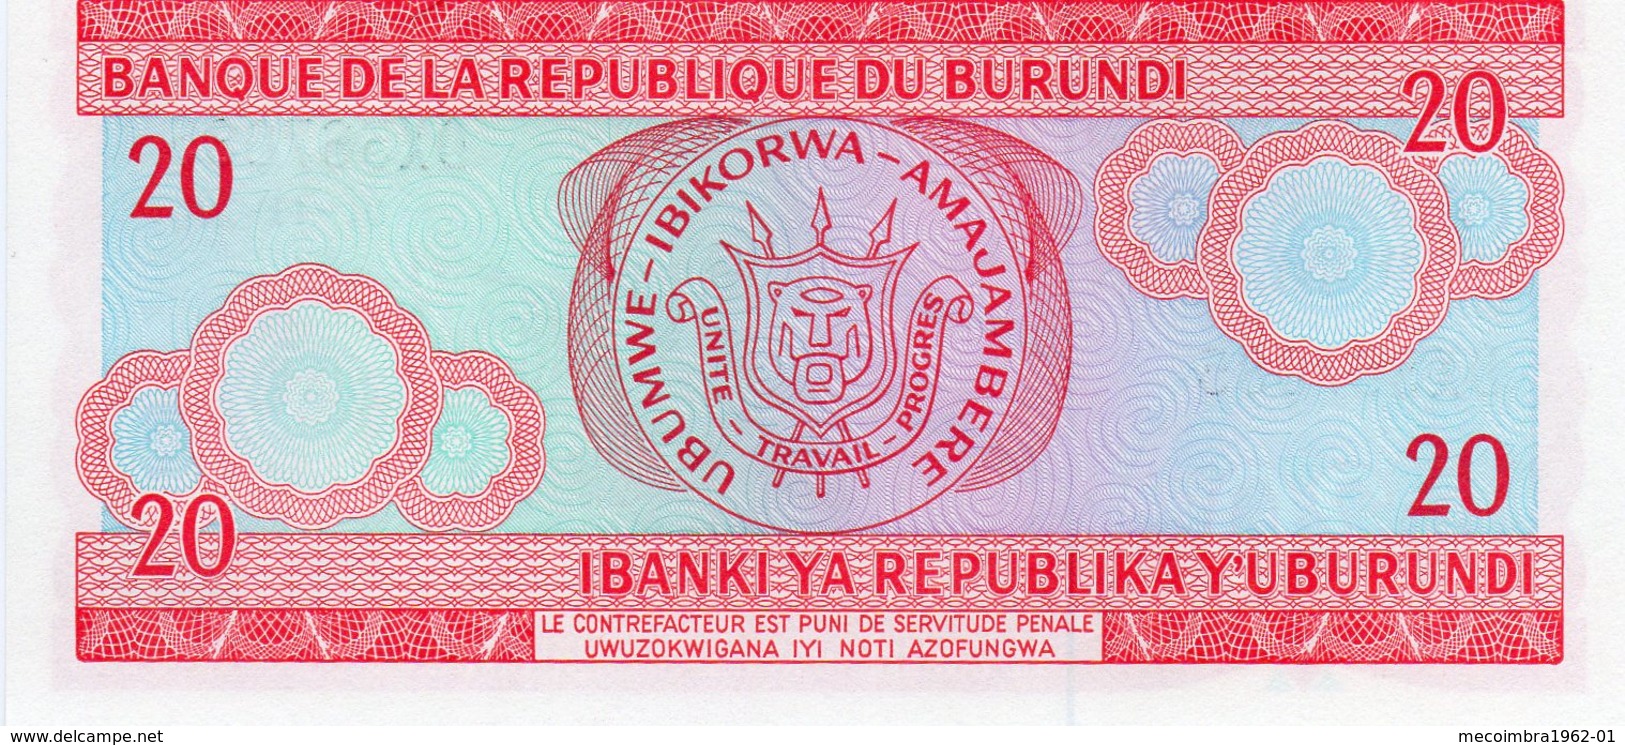 REPUBLIQUE DUBURUNDI / 20 FRANCS AMFRANGA / BANK YA REPUBLIKA - Burundi